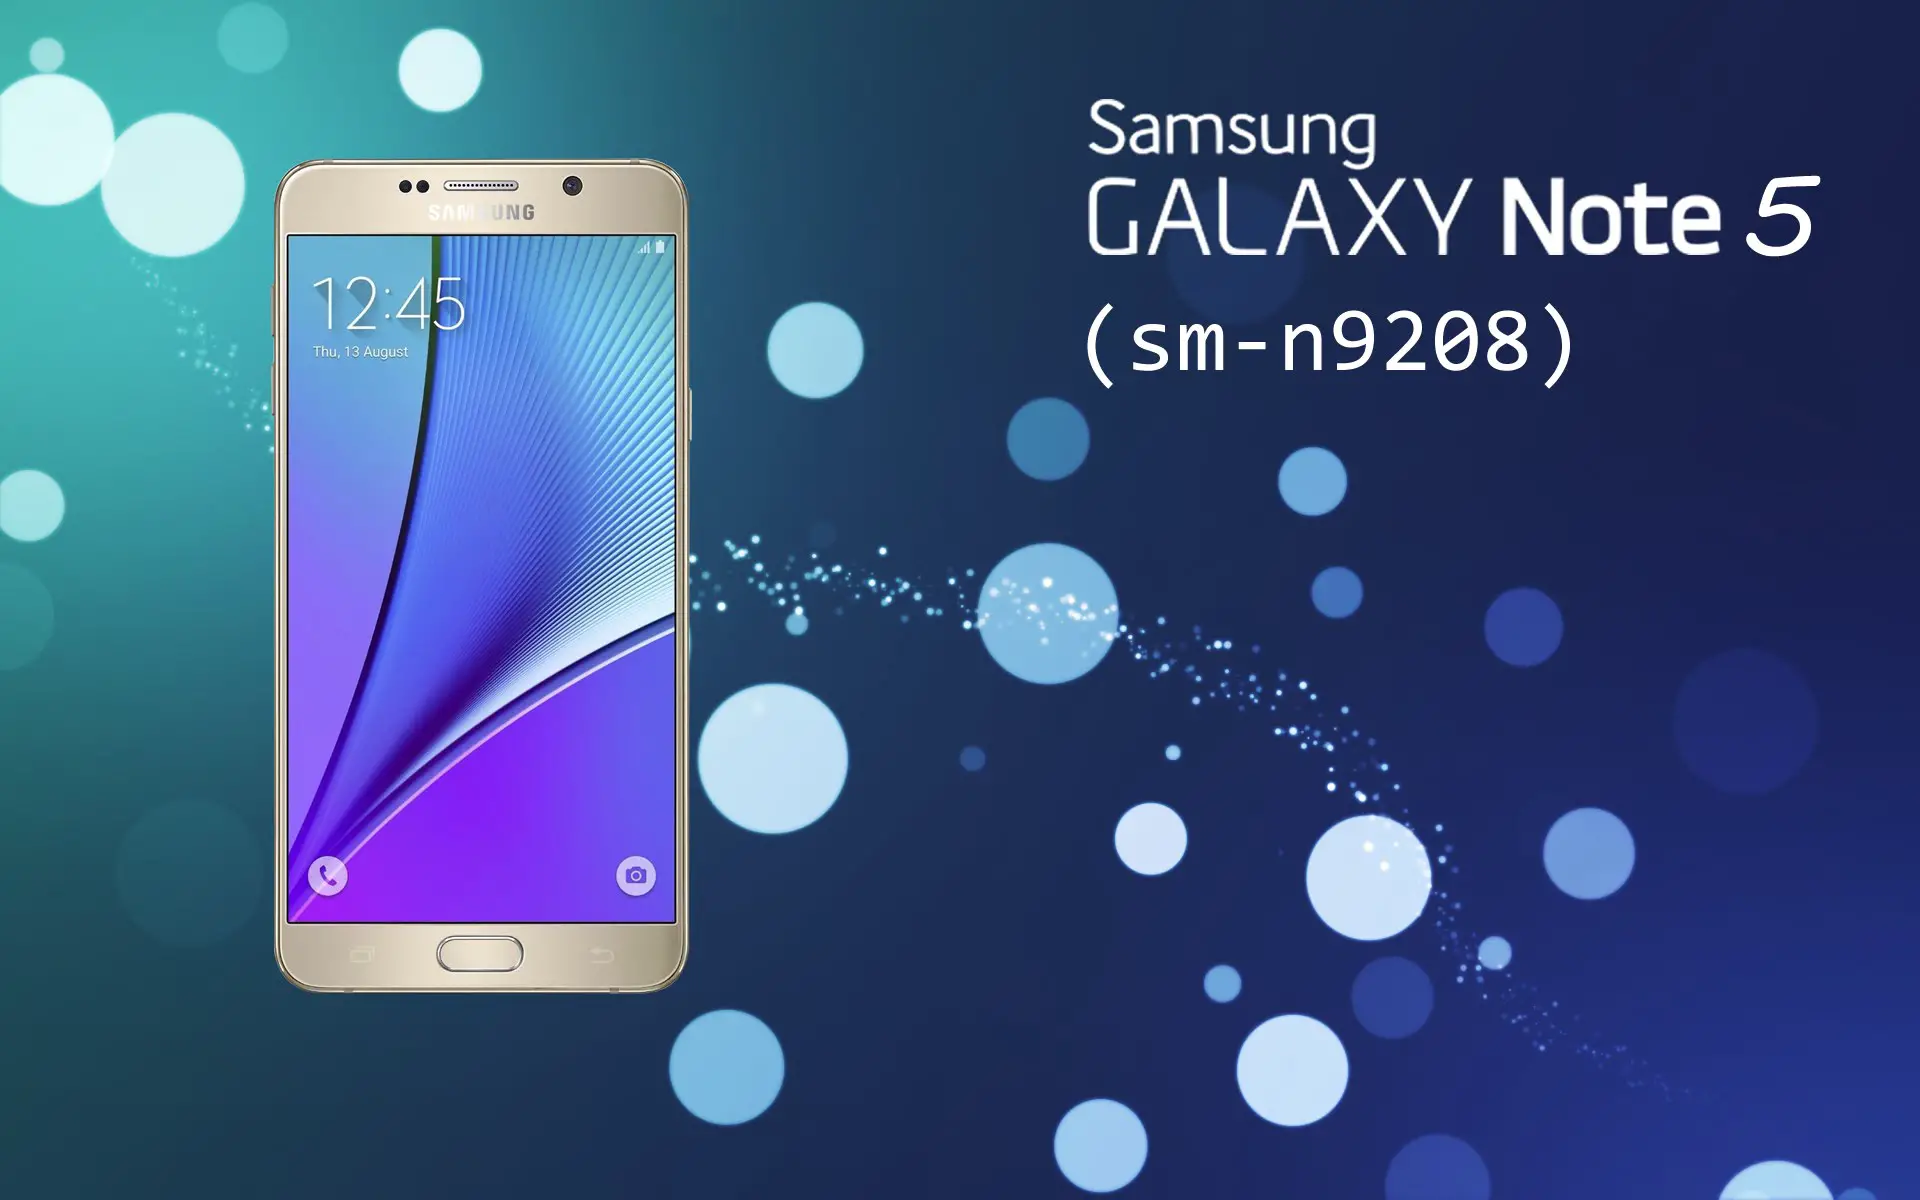 Flash Stock Rom on Samsung Galaxy note 5 SM-n9208